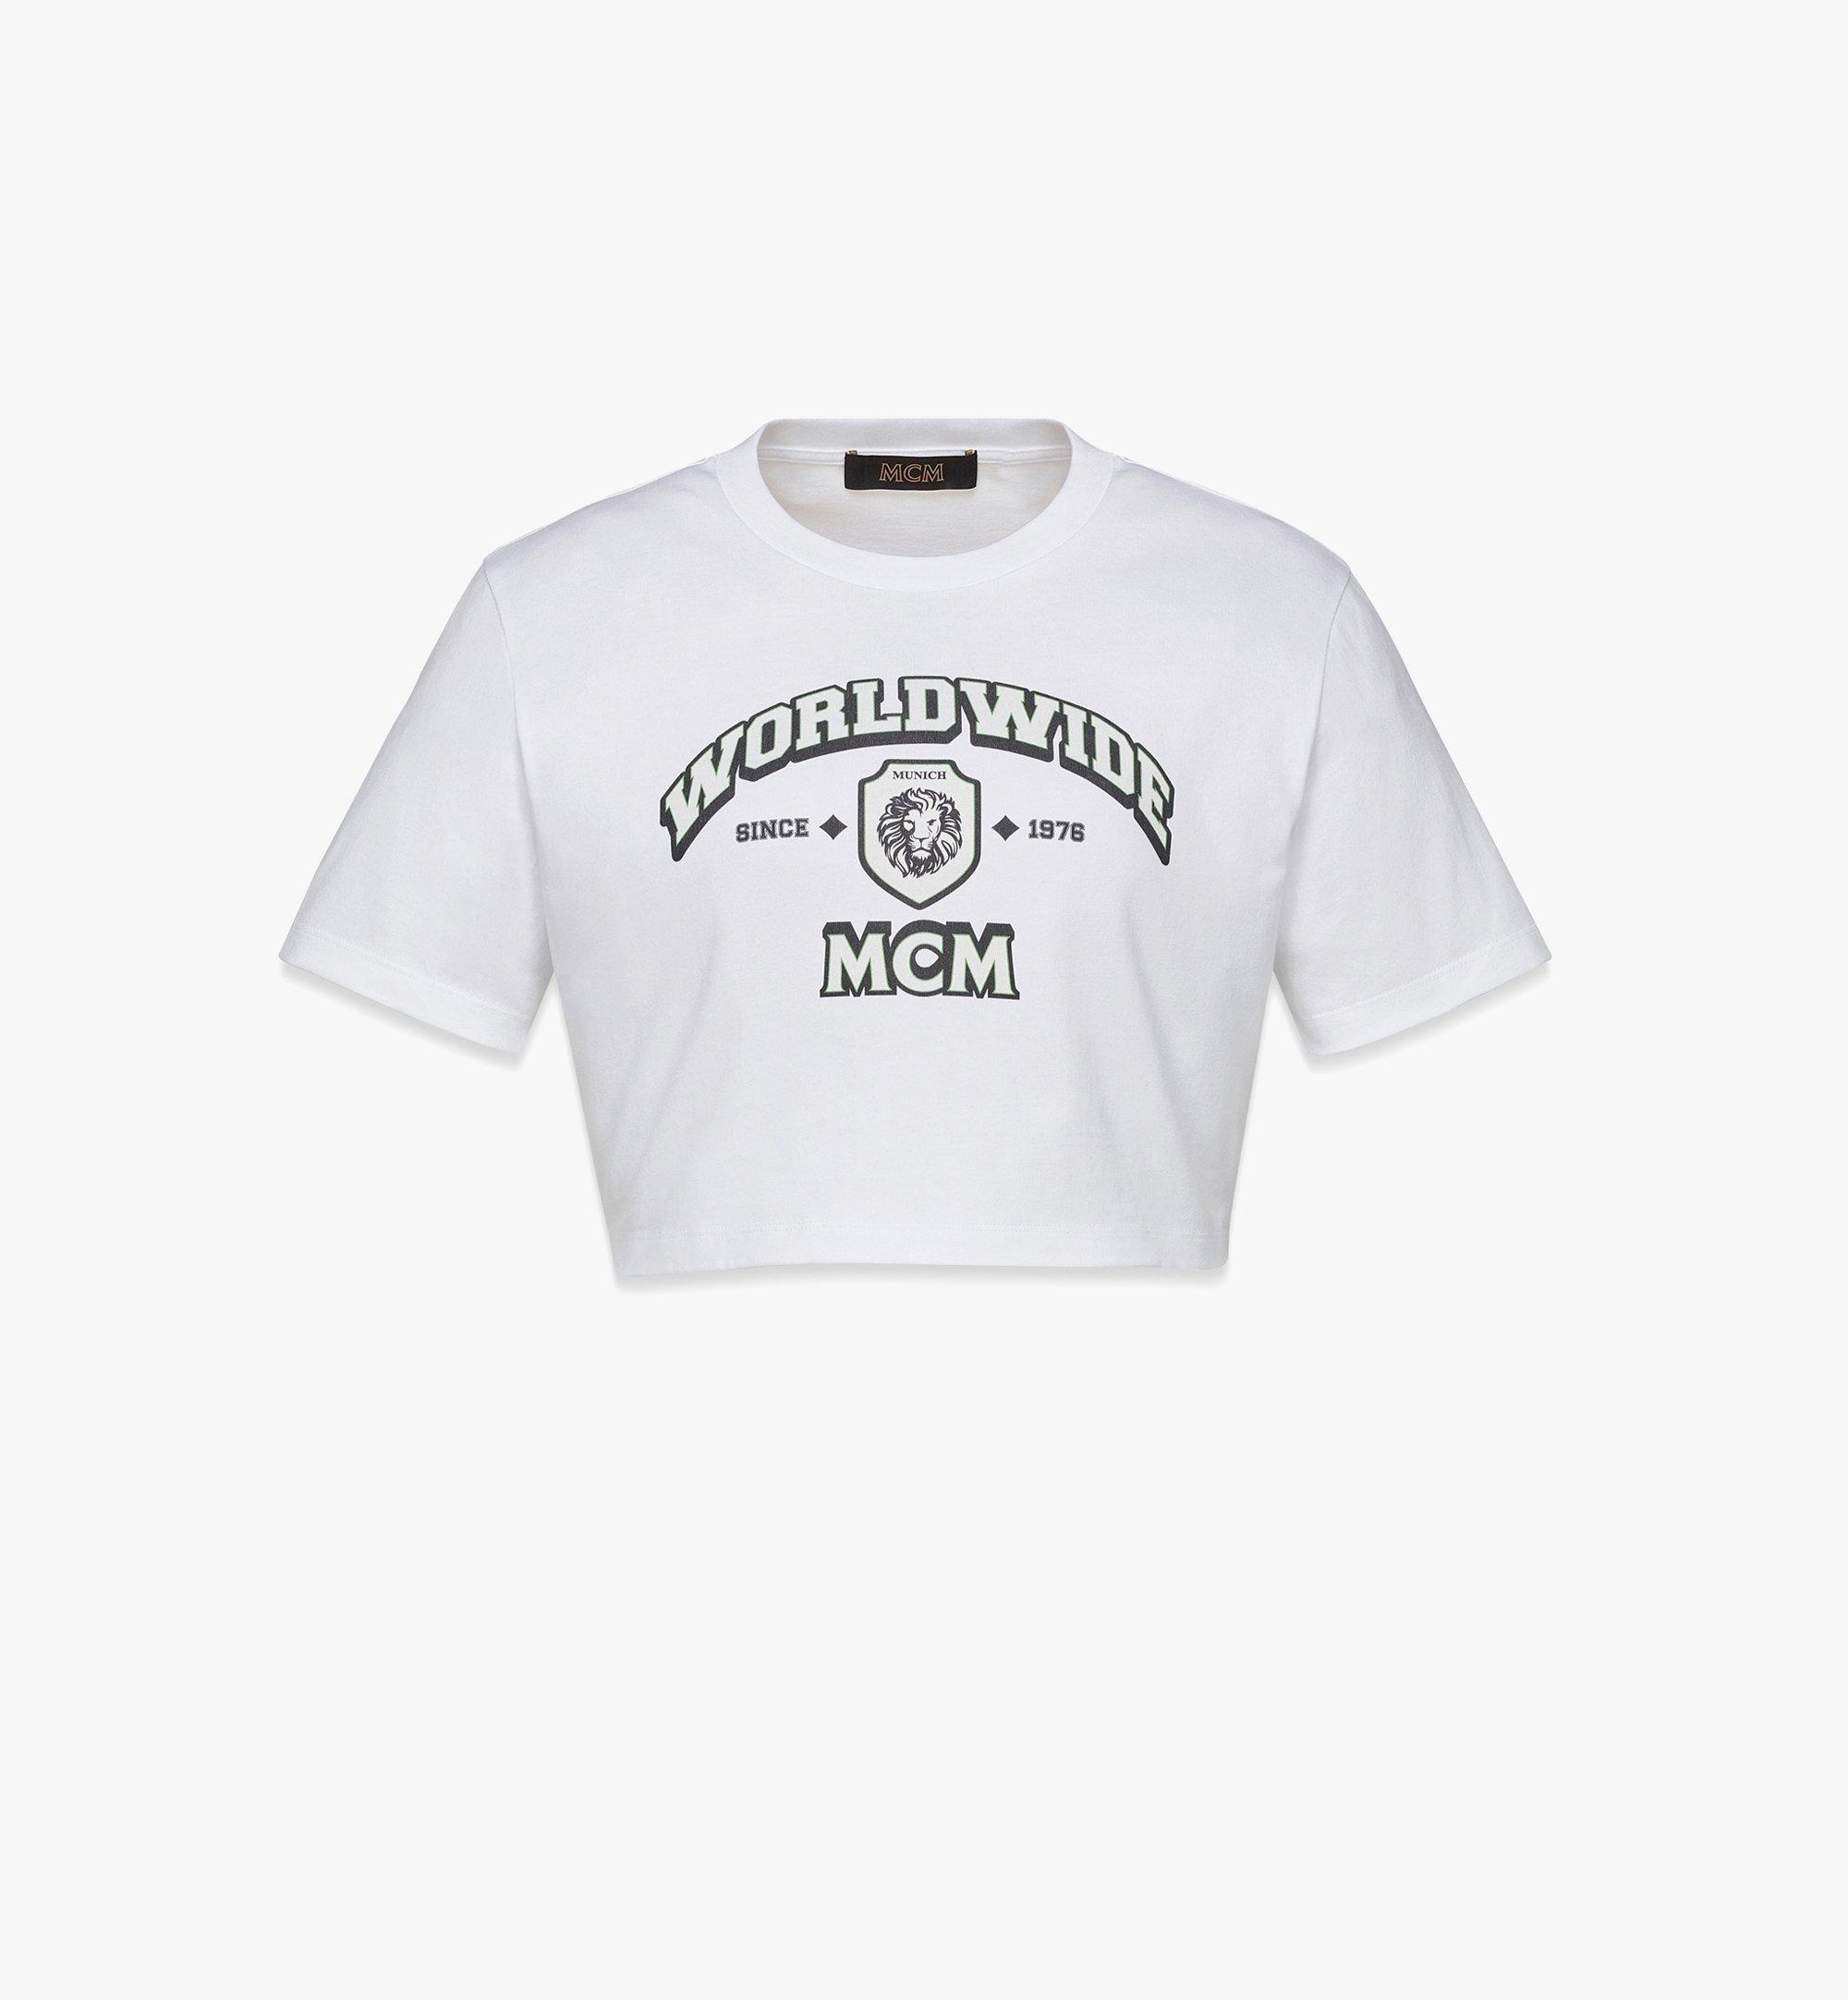 MCM Worldwide Print Cropped T-Shirt in Organic Cotton - 1